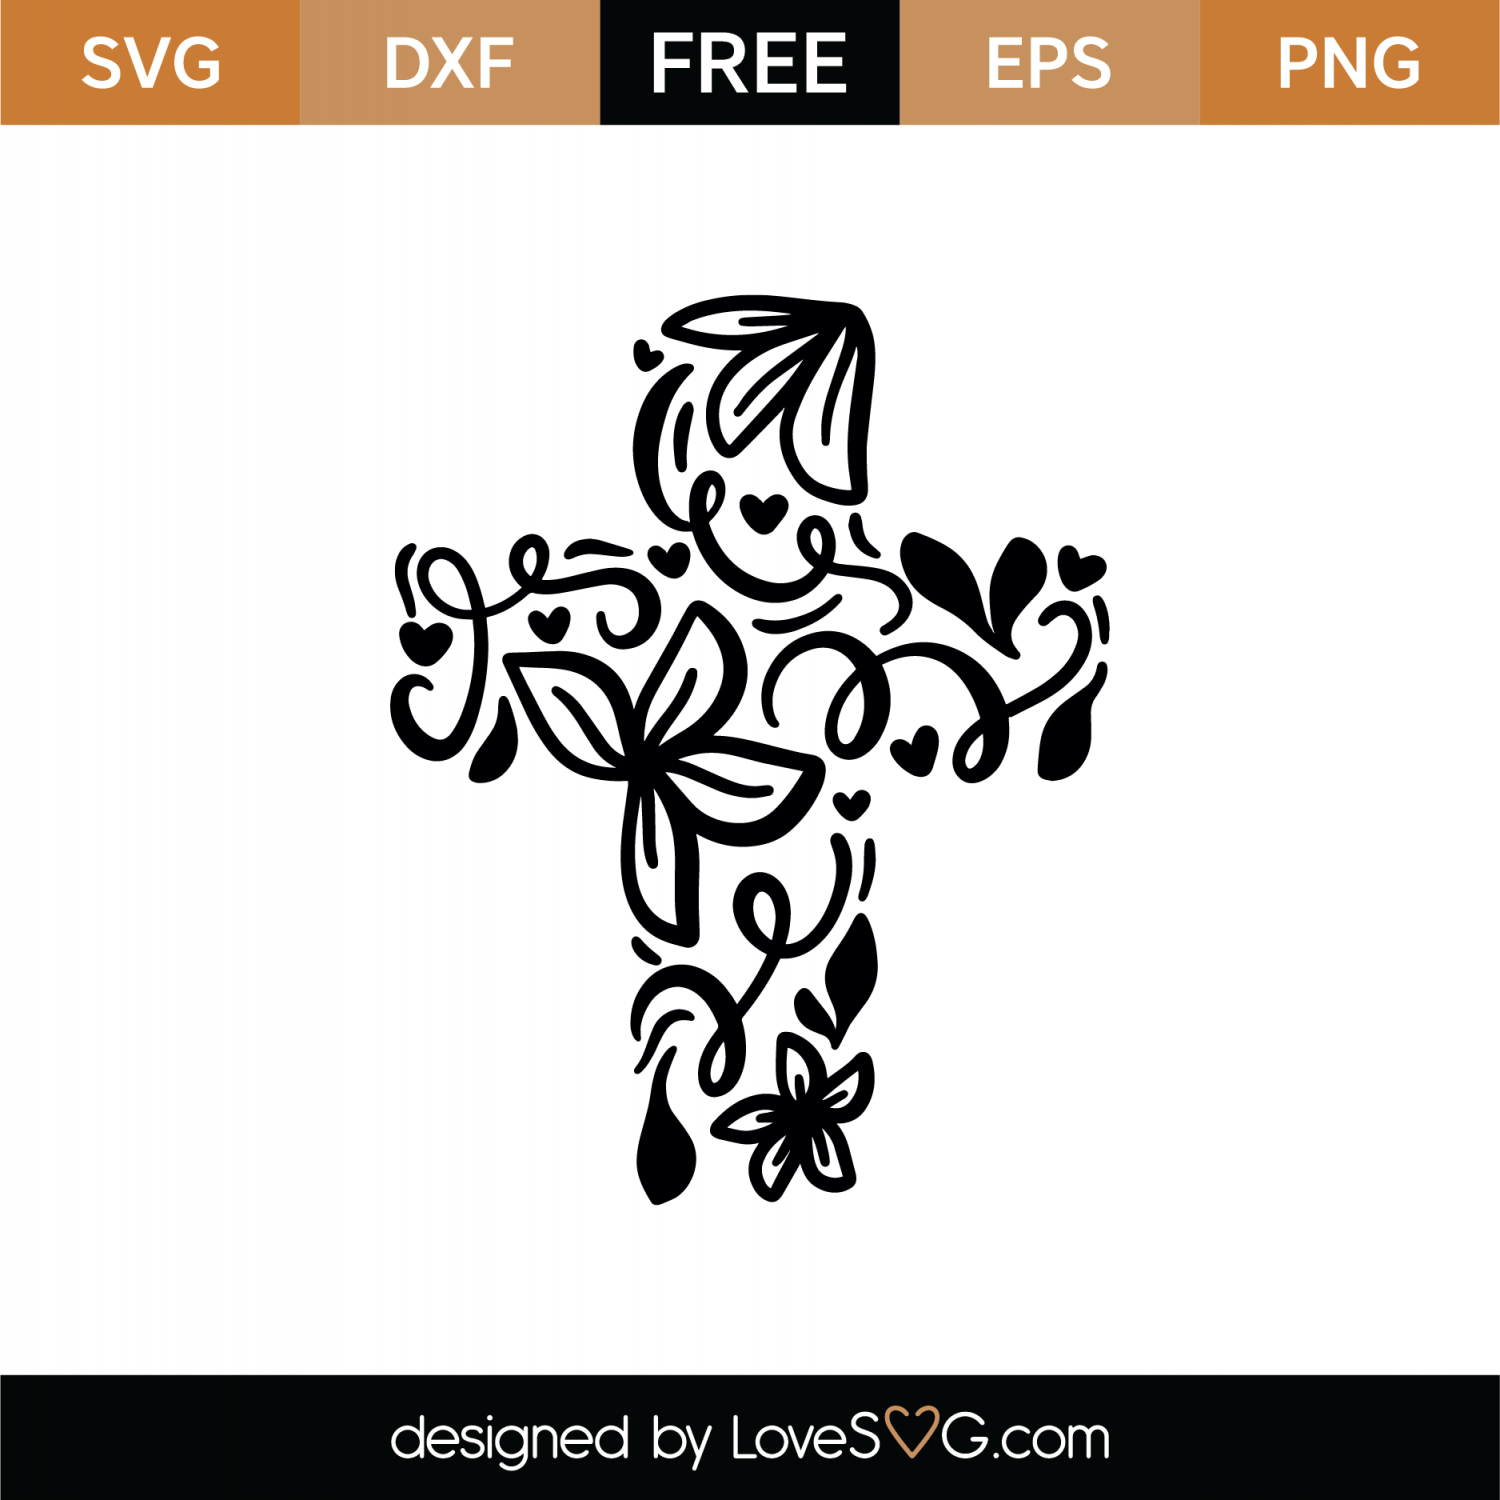 Free Flourish Cross SVG Cut File | Lovesvg.com